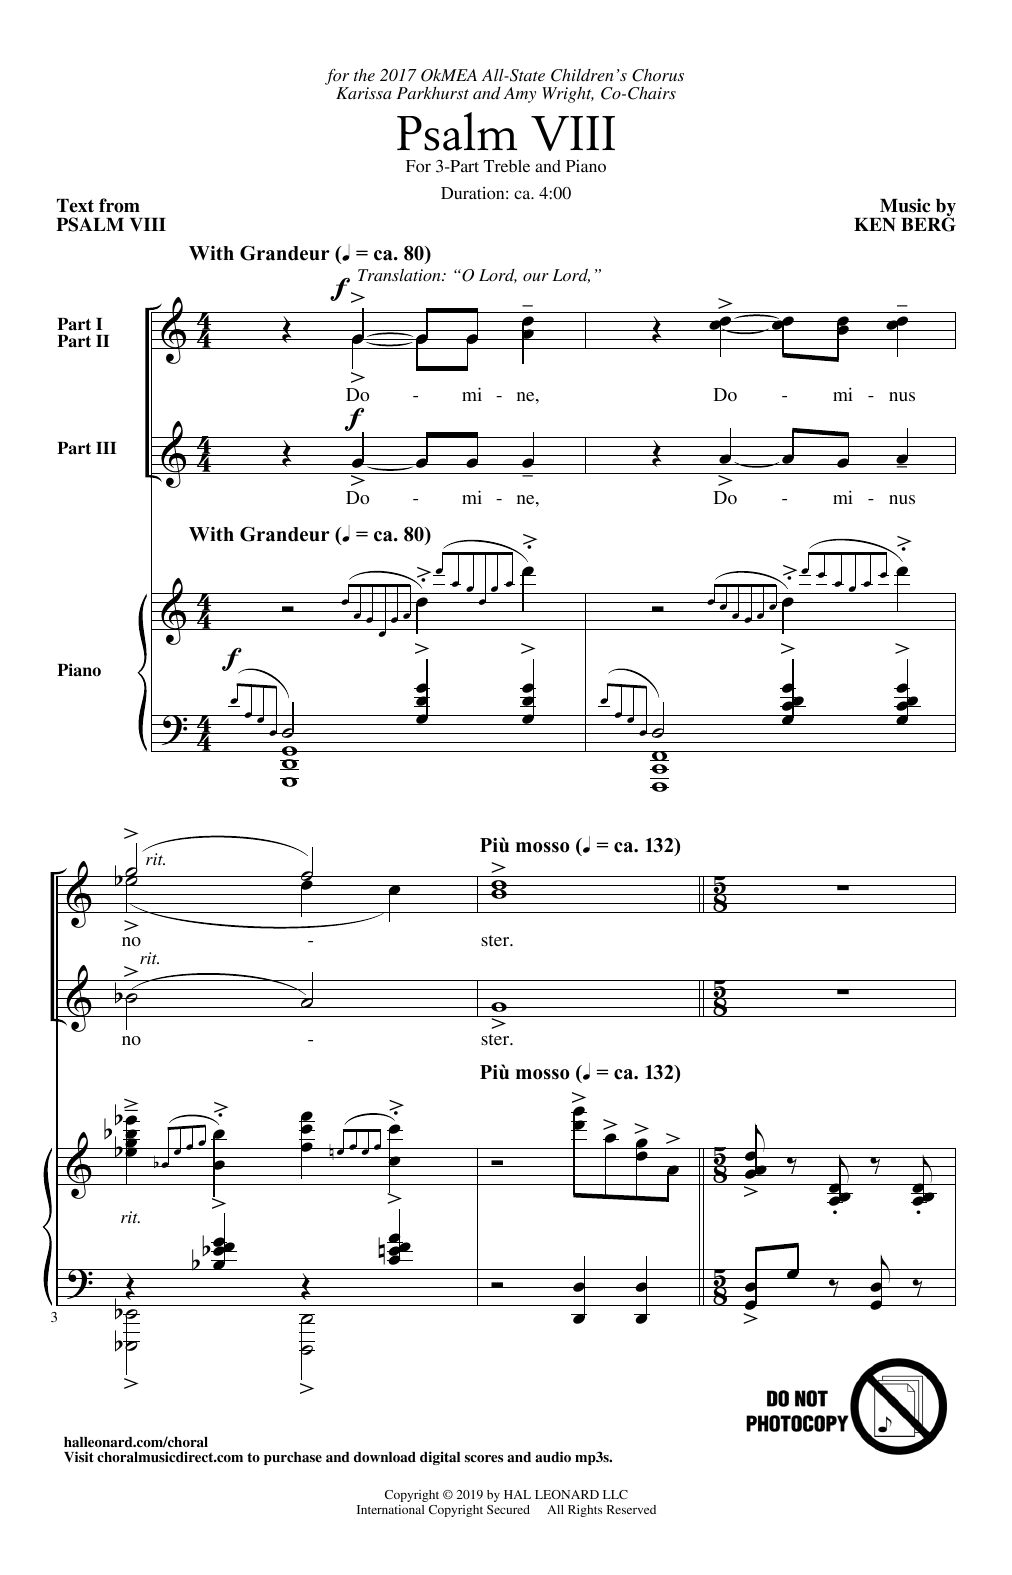 Ken Berg Psalm VIII Sheet Music Notes & Chords for 3-Part Treble Choir - Download or Print PDF